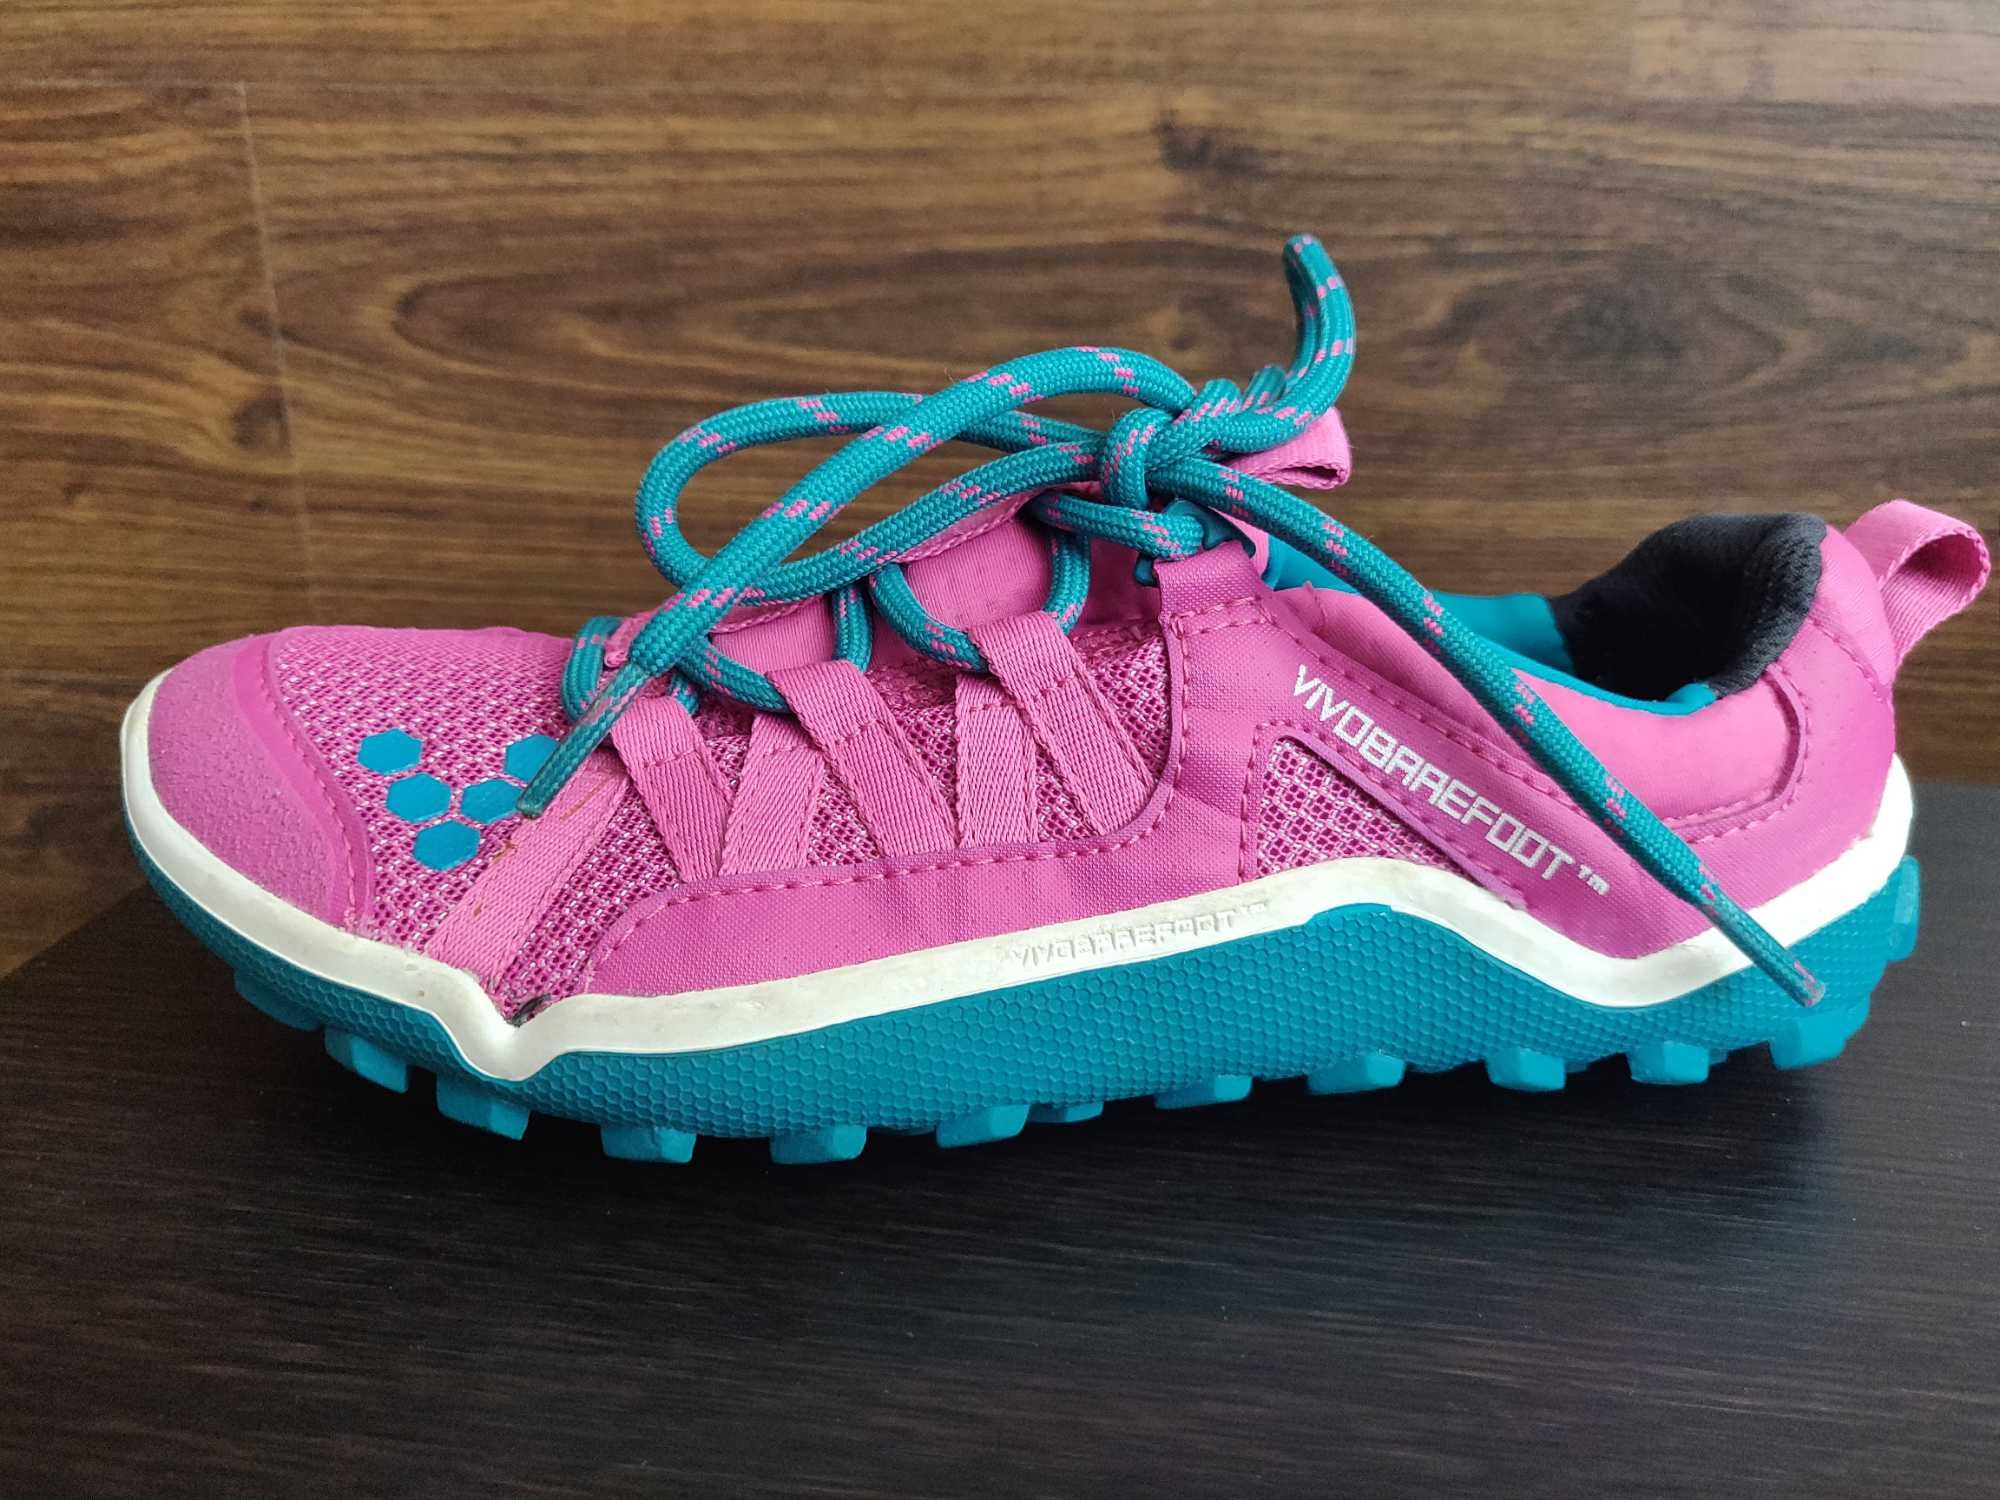 Vivobarefoot Trail Womens р. 36 Minimalist Running Shoes стелька 22,5